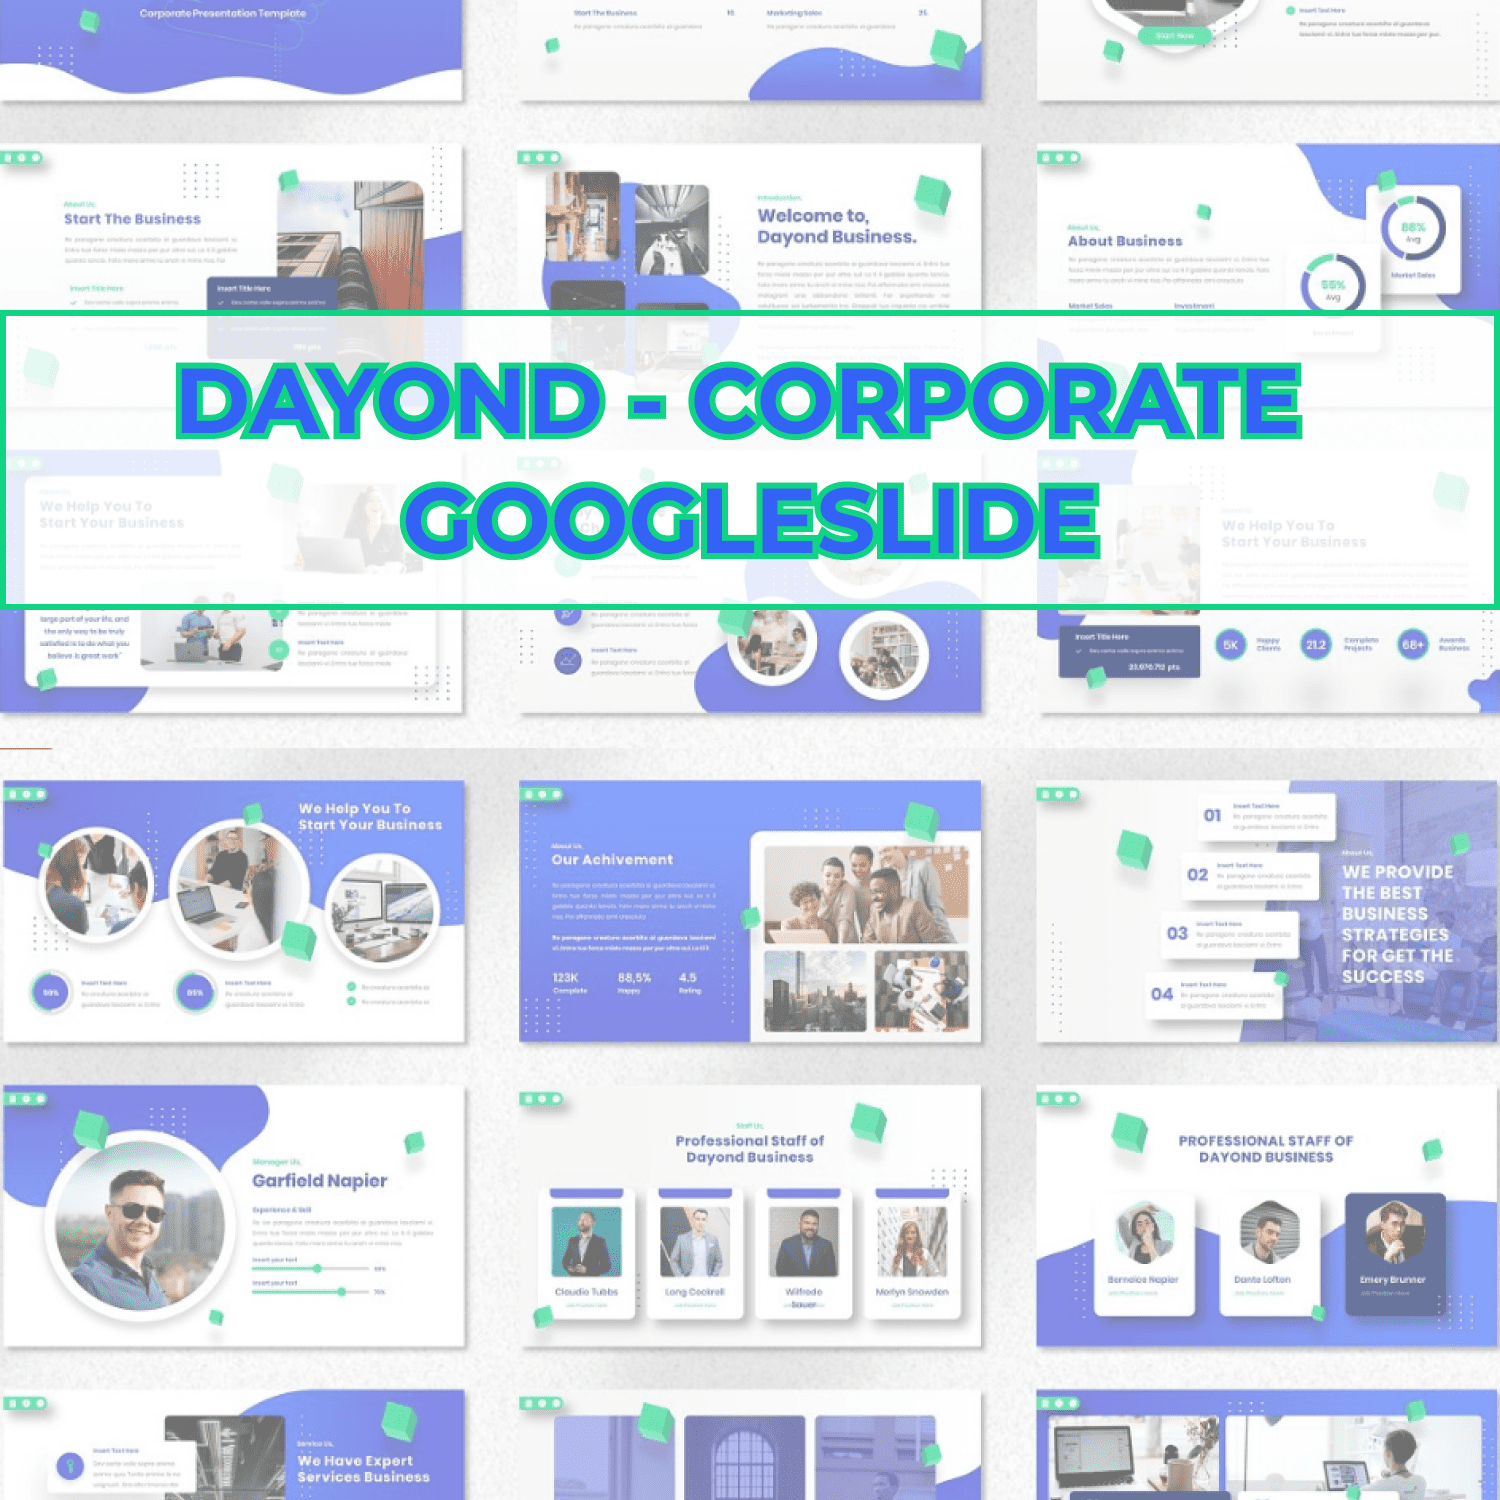 Dayond - Corporate Googleslide cover image.